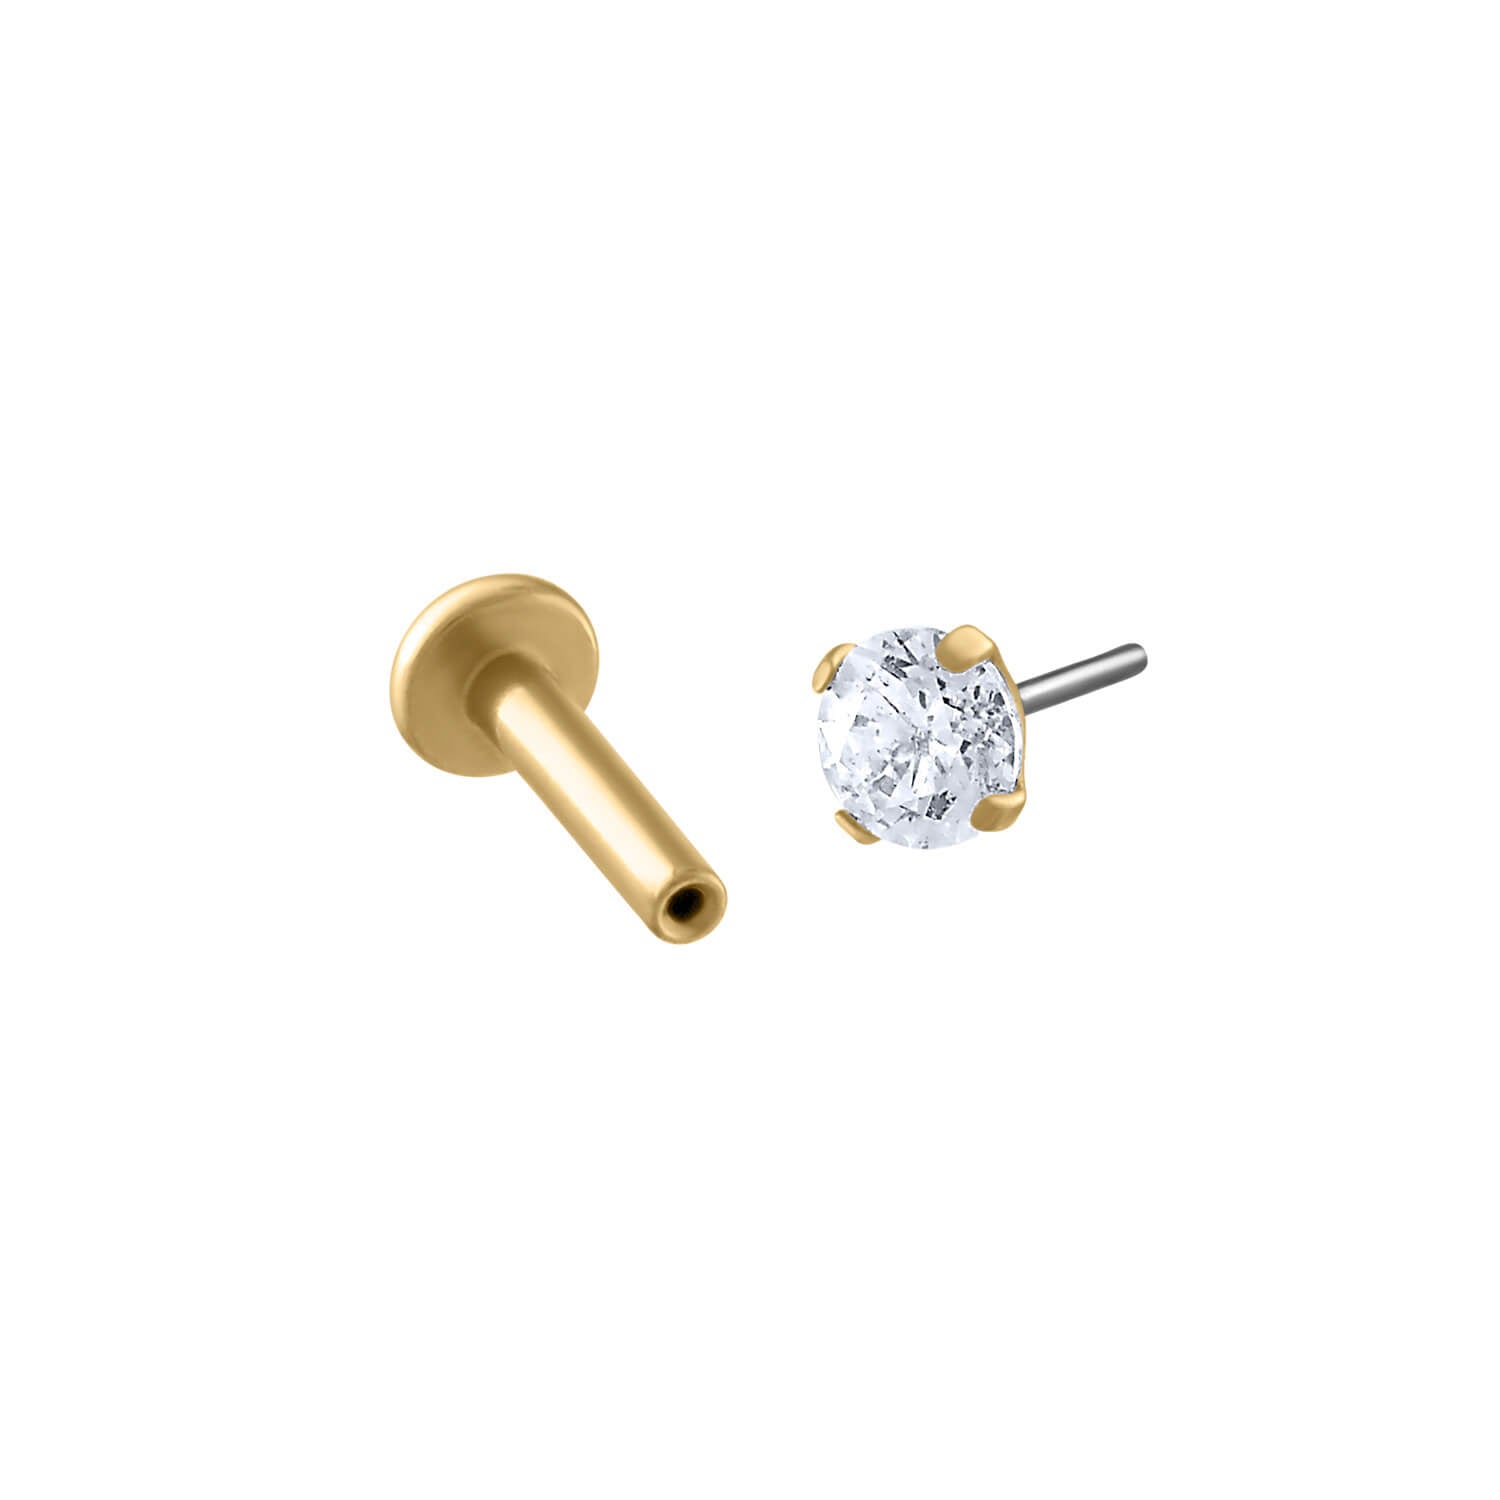 Flat Back Earrings | Gold Cartilage Earrings | Assolari